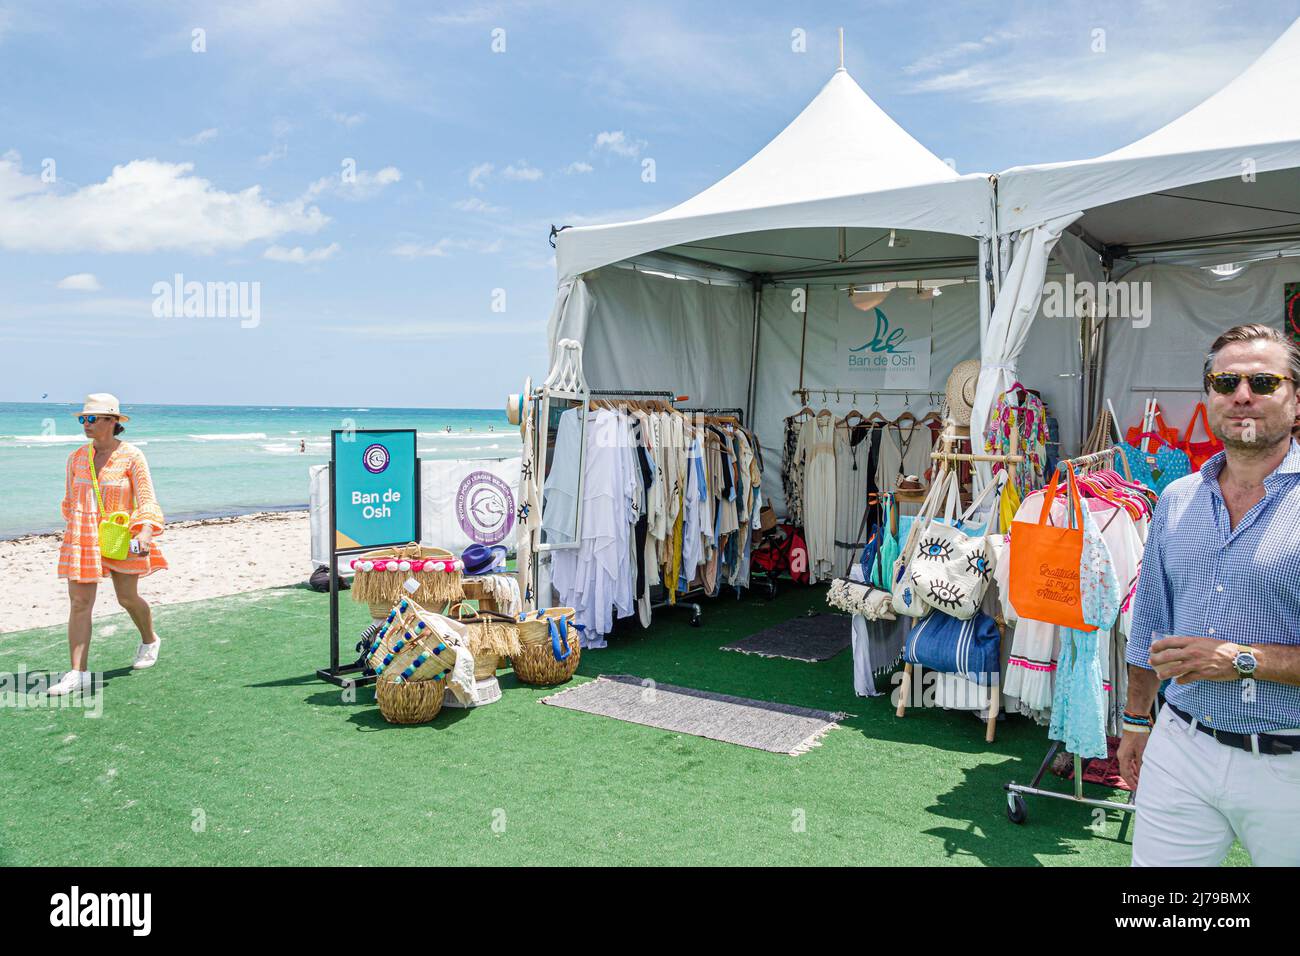 Miami Beach Florida Beach Polo World Cup Miami annual event Retail Village shopping vendors tents clothing display sale Stock Photo